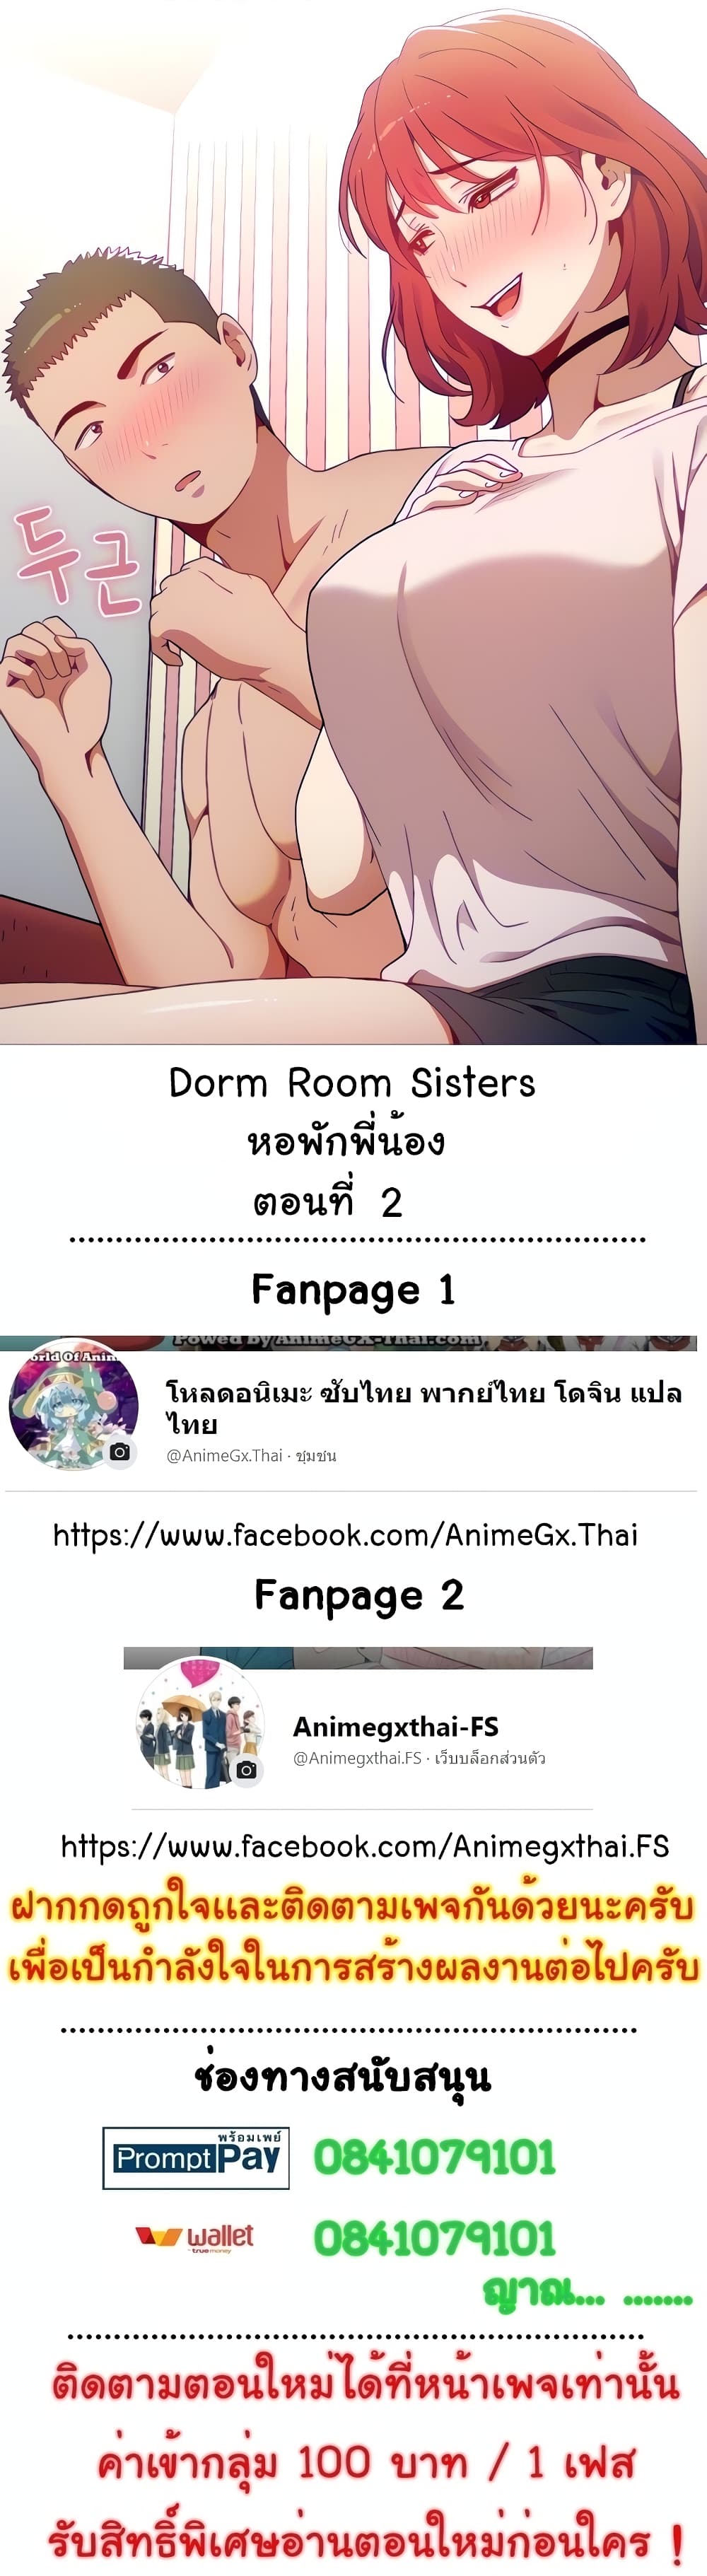 Dorm Room Sisters 2-2